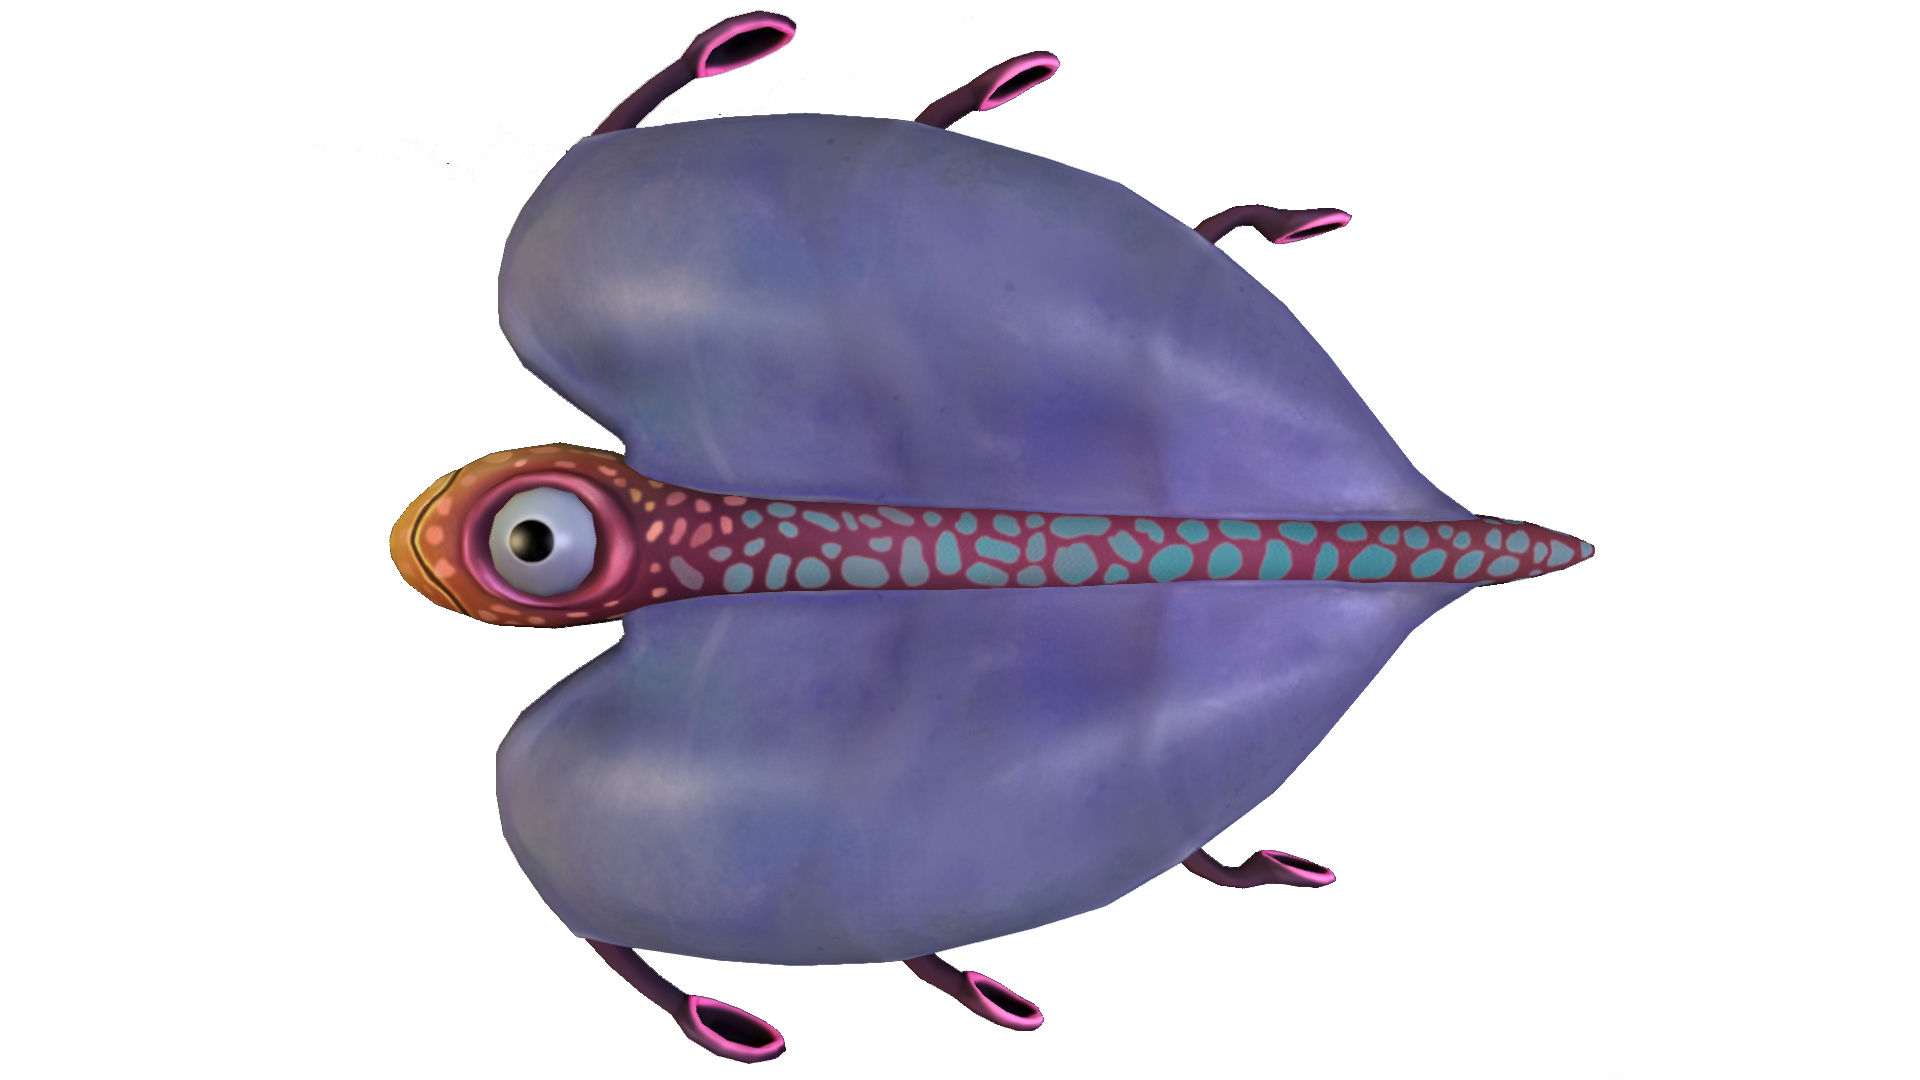 Bladderfish (Subnautica), Subnautica Wiki